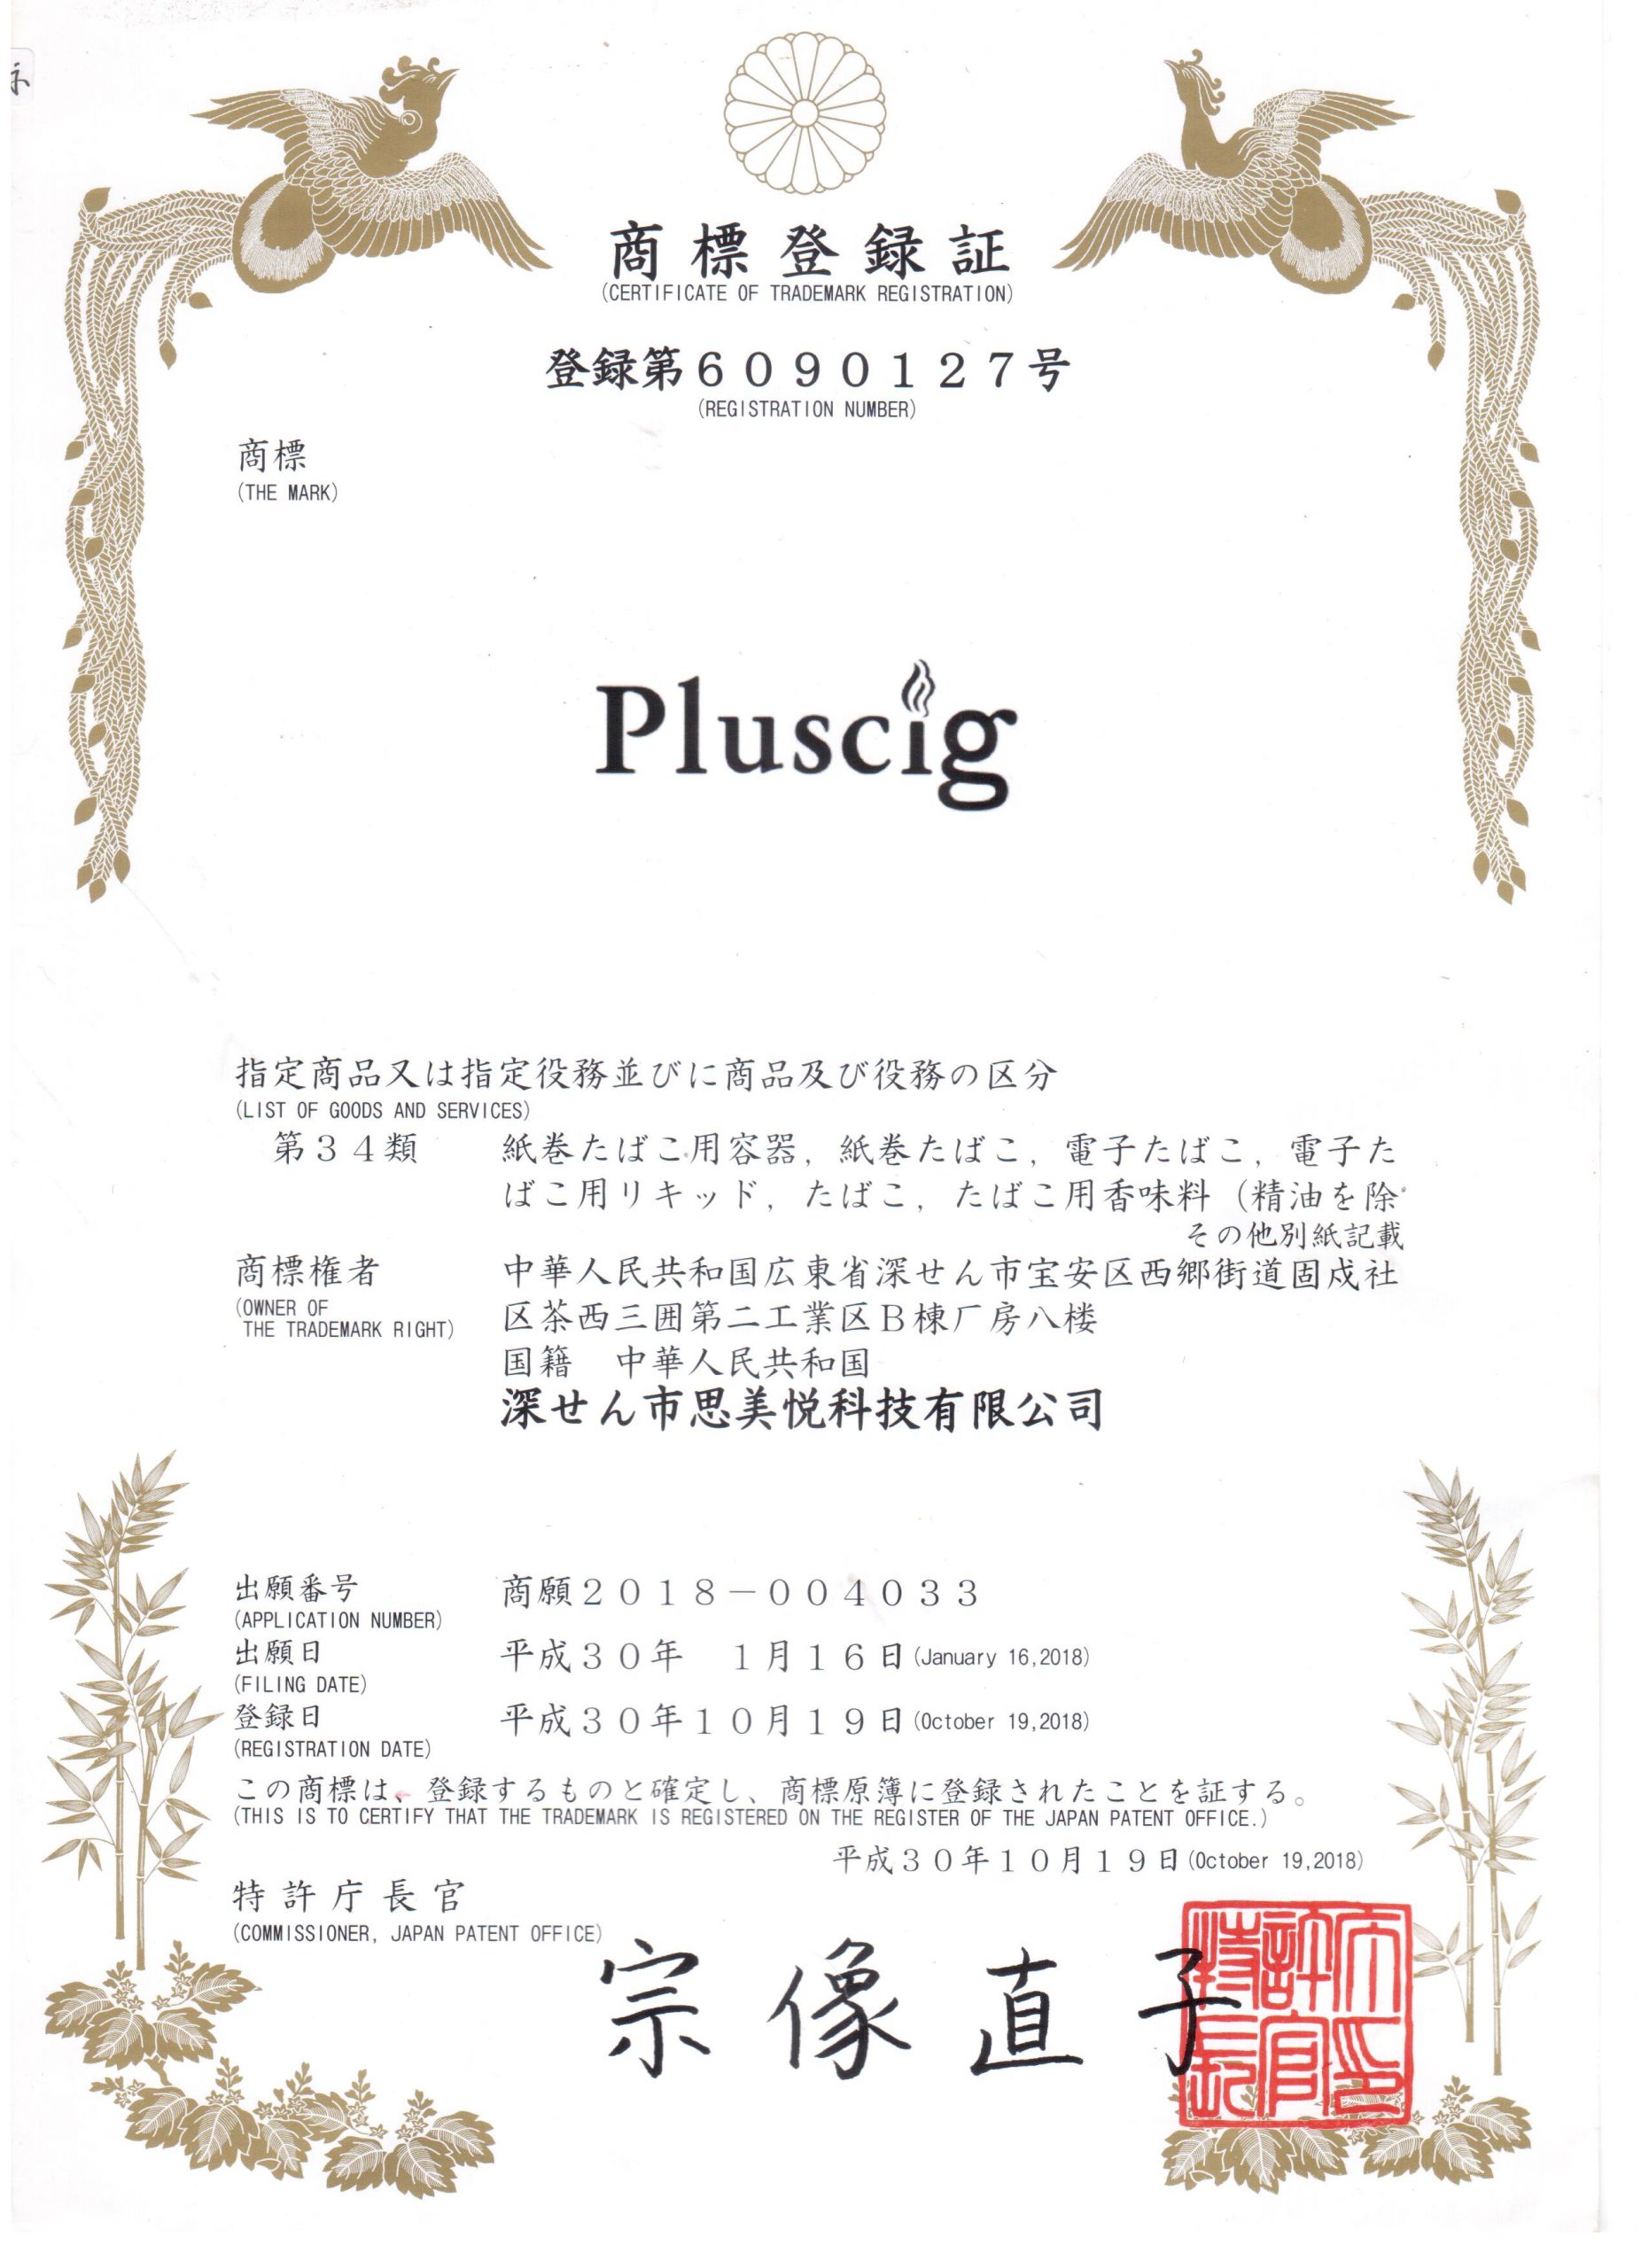 Pluscig JP Trademark